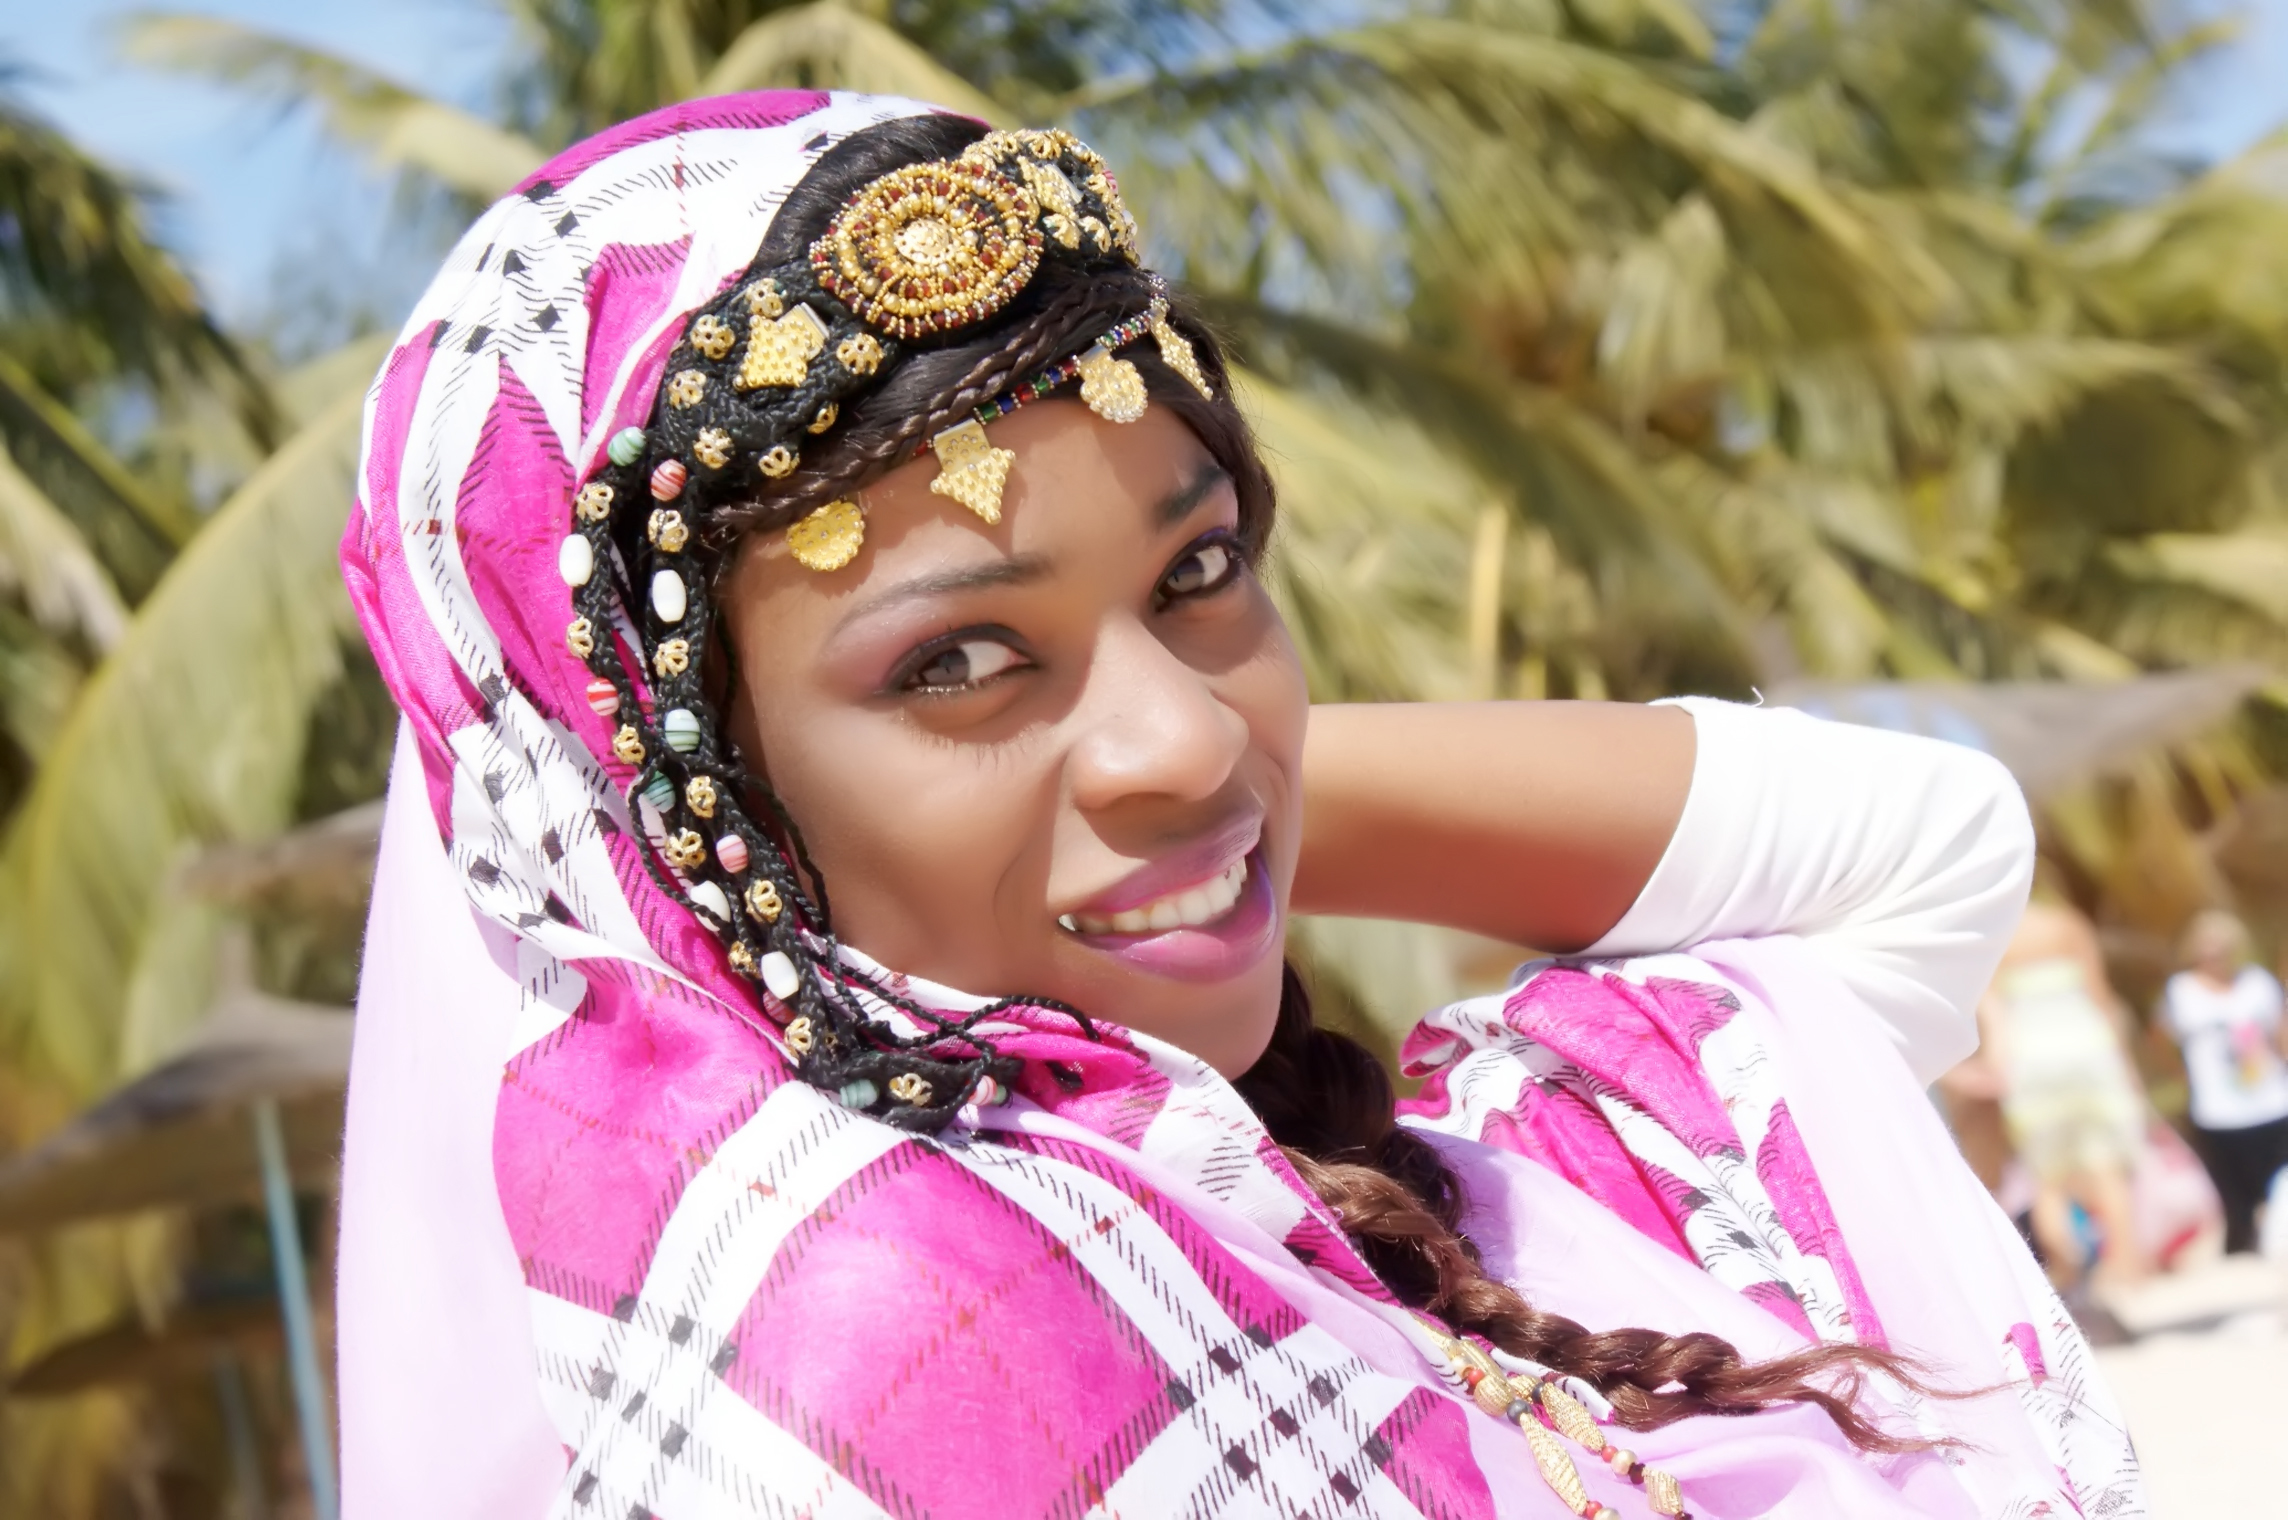 Maty Ba elle est commerciale, elle habite Dakar